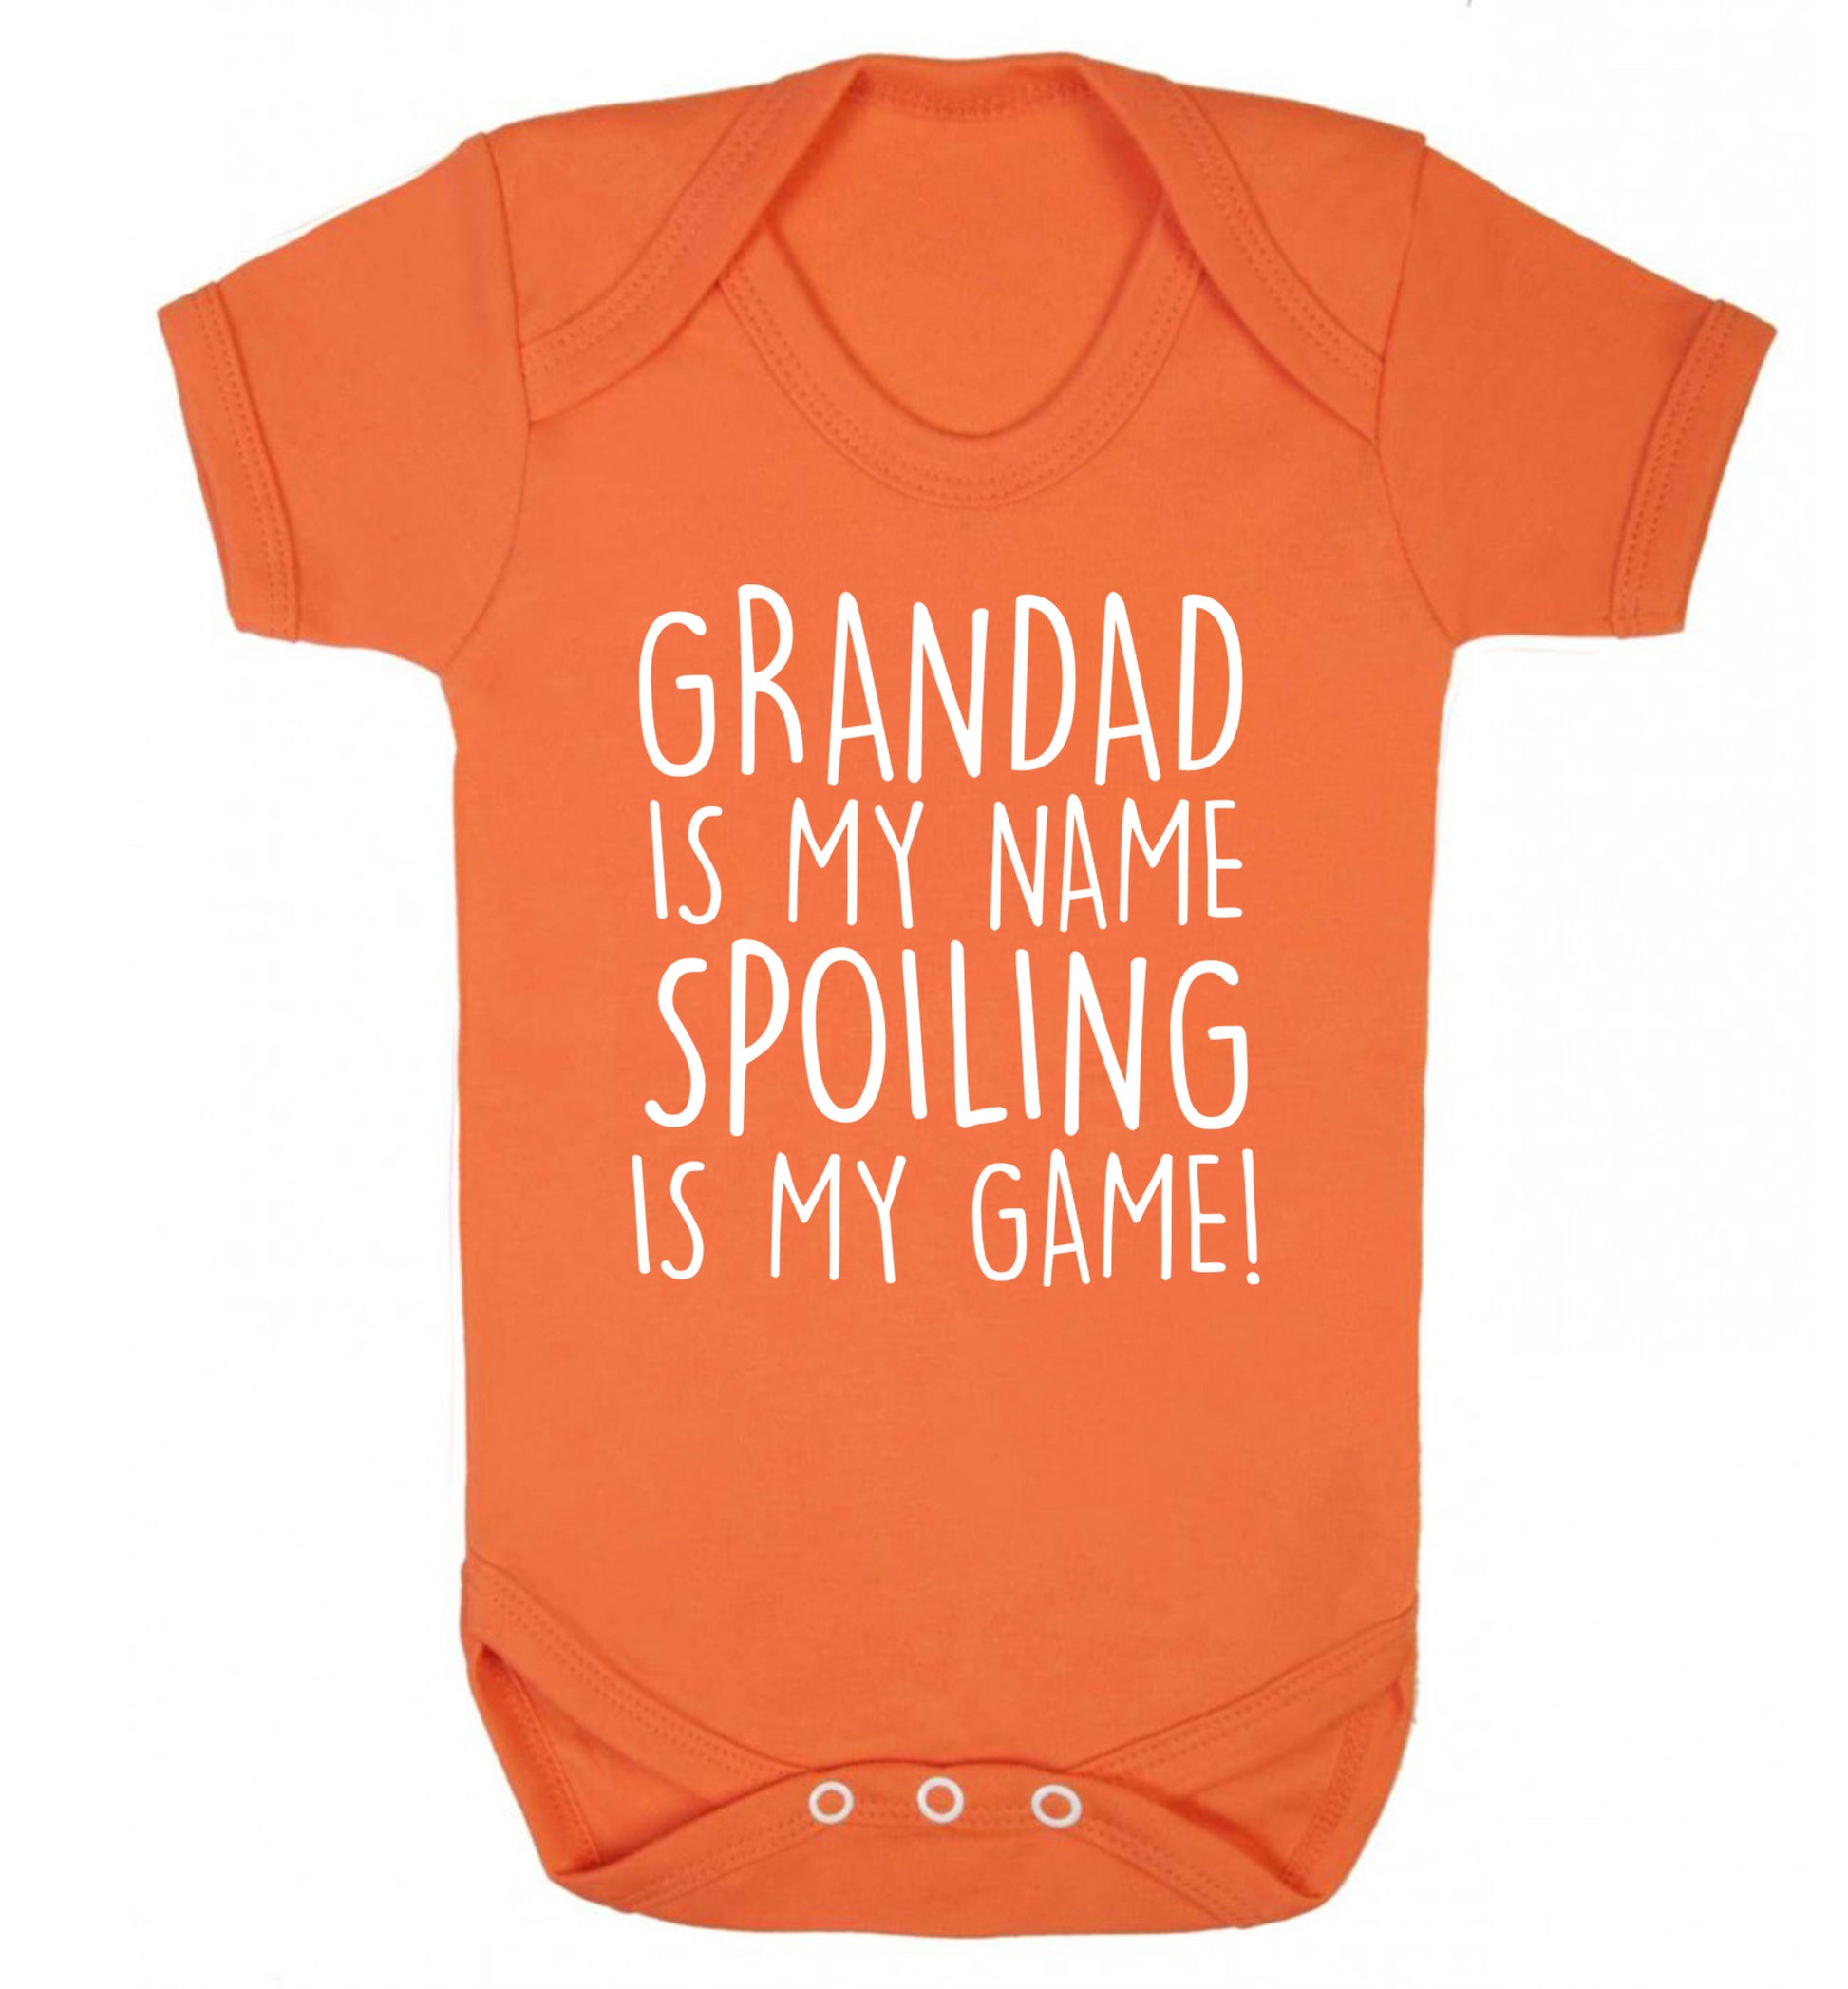 Grandad is my name, spoiling is my game Baby Vest orange 18-24 months